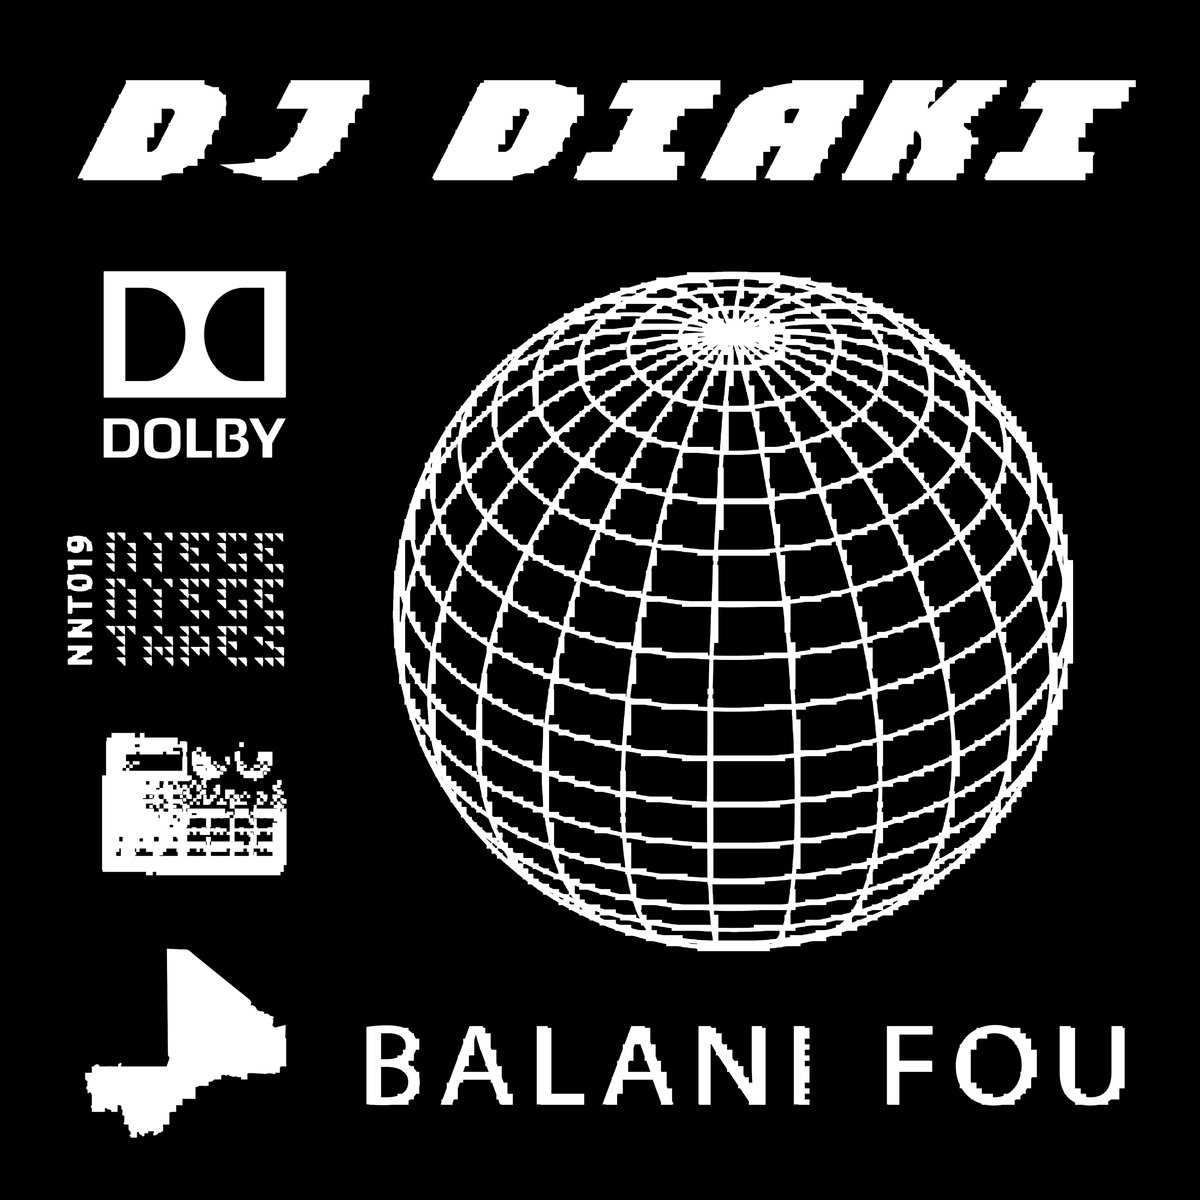 Dj DIaki - Balani Fou